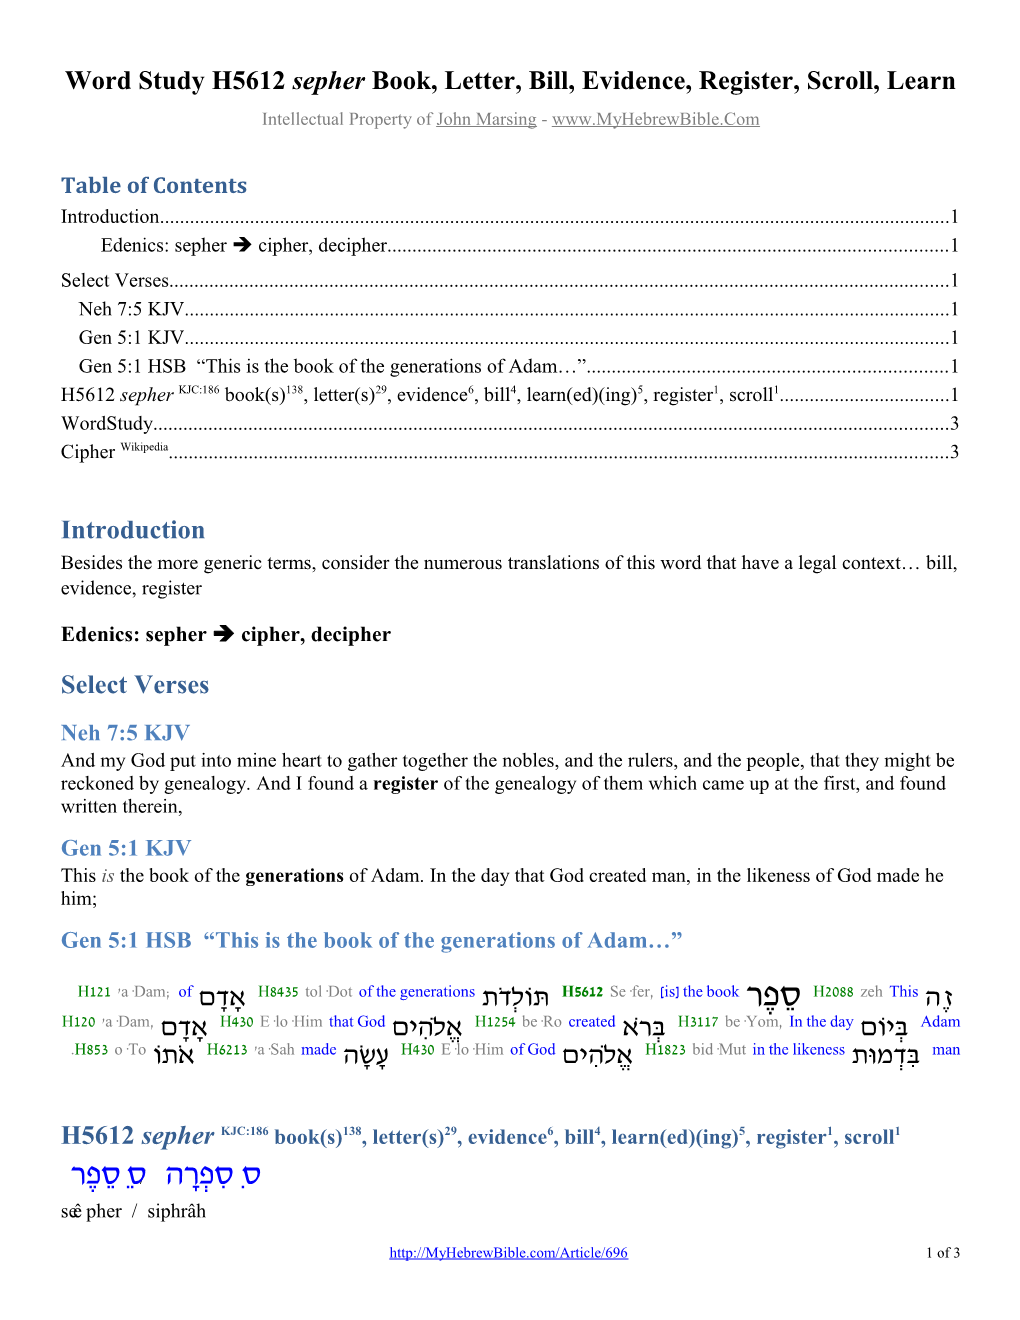 Word Study H5612 Sepher Book, Letter, Bill, Evidence, Register, Scroll, Learn